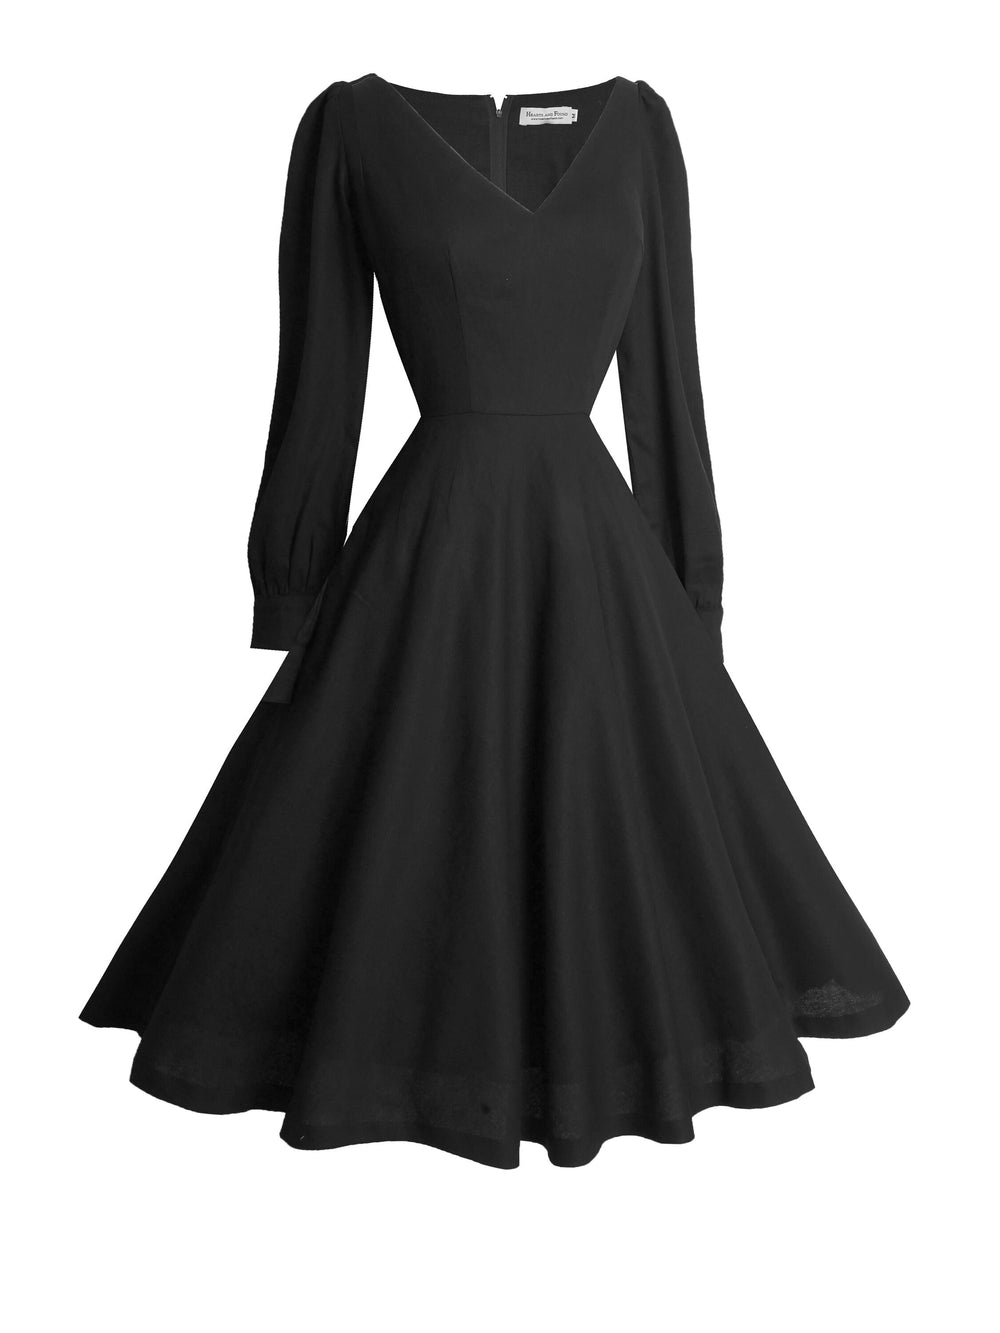 MTO - Donna Dress in Midnight Black Linen